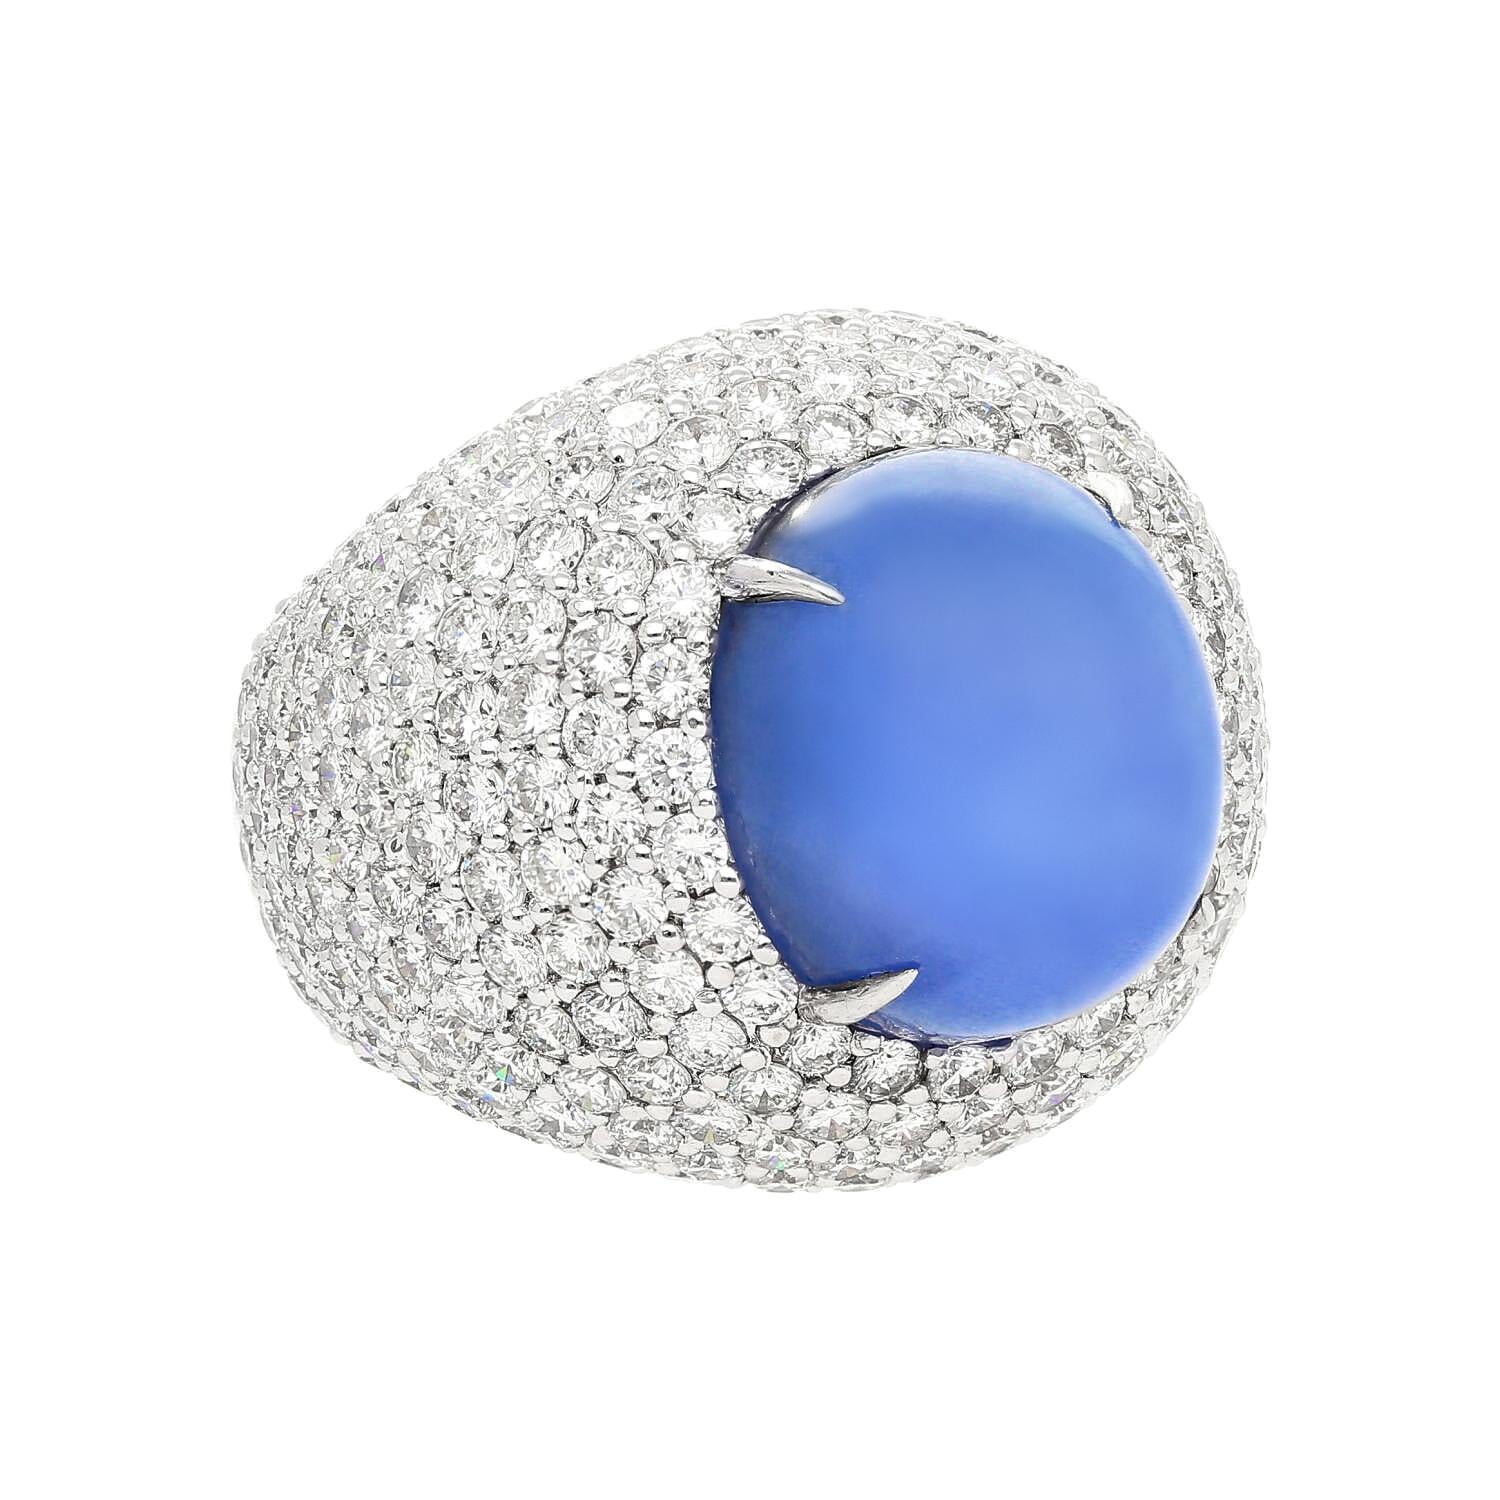 Jewelry Details:
Item Type: Ring
Metal Type: 18K White Gold
Gemstones: Ceylon Blue Sapphire, Diamond
Weight: 18.31 grams (Total Weight)
Size: 6.5 US (Resizable)

Center Stone Details:
Gemstone Type: Ceylon Blue Sapphire
Carat: 28.90 Carats
Cut: